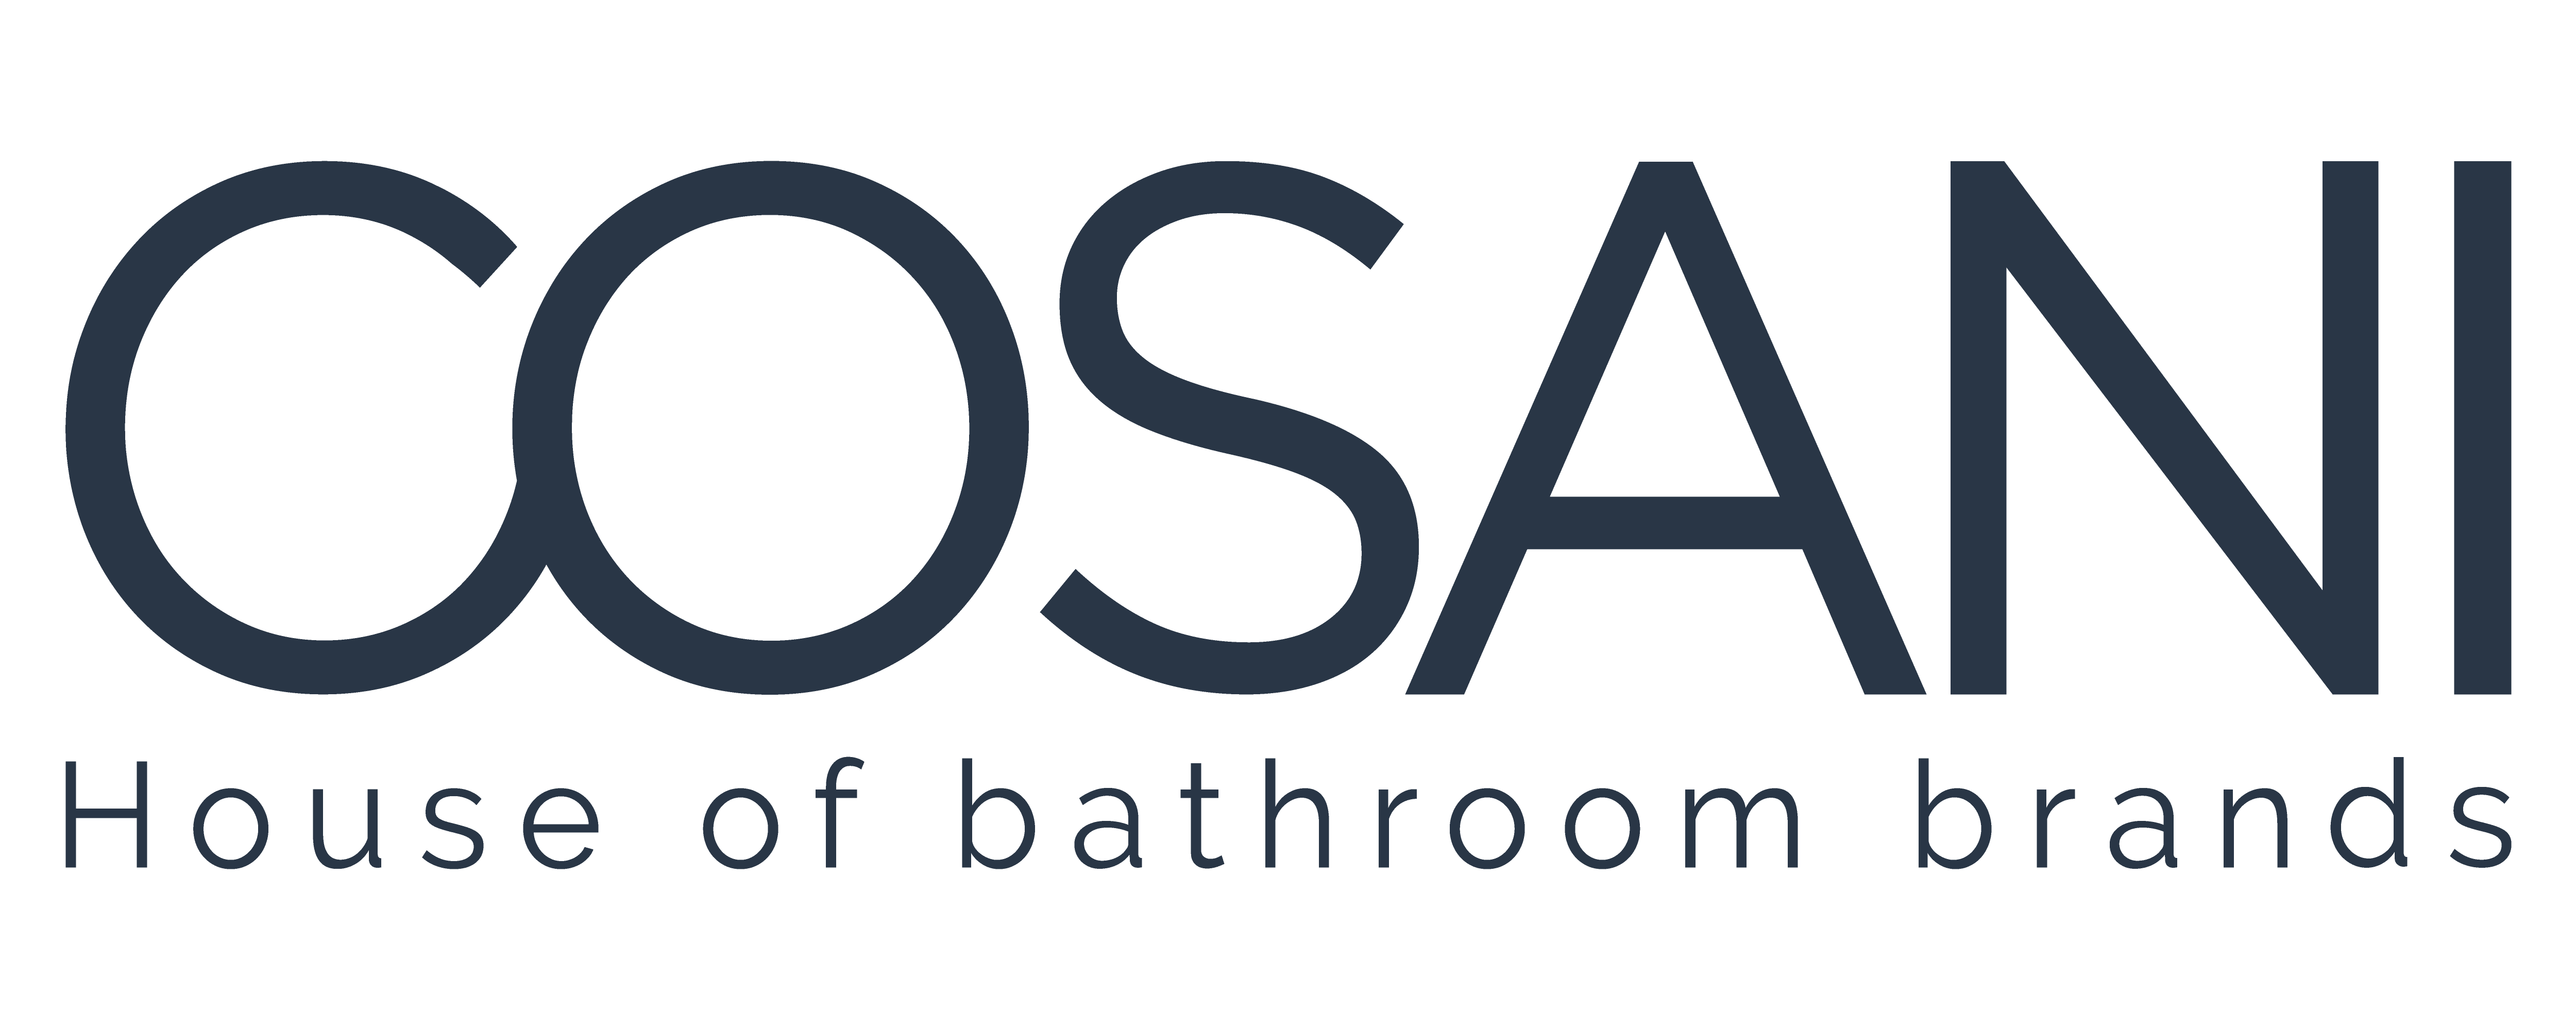 Cosani - House of bathroom brands